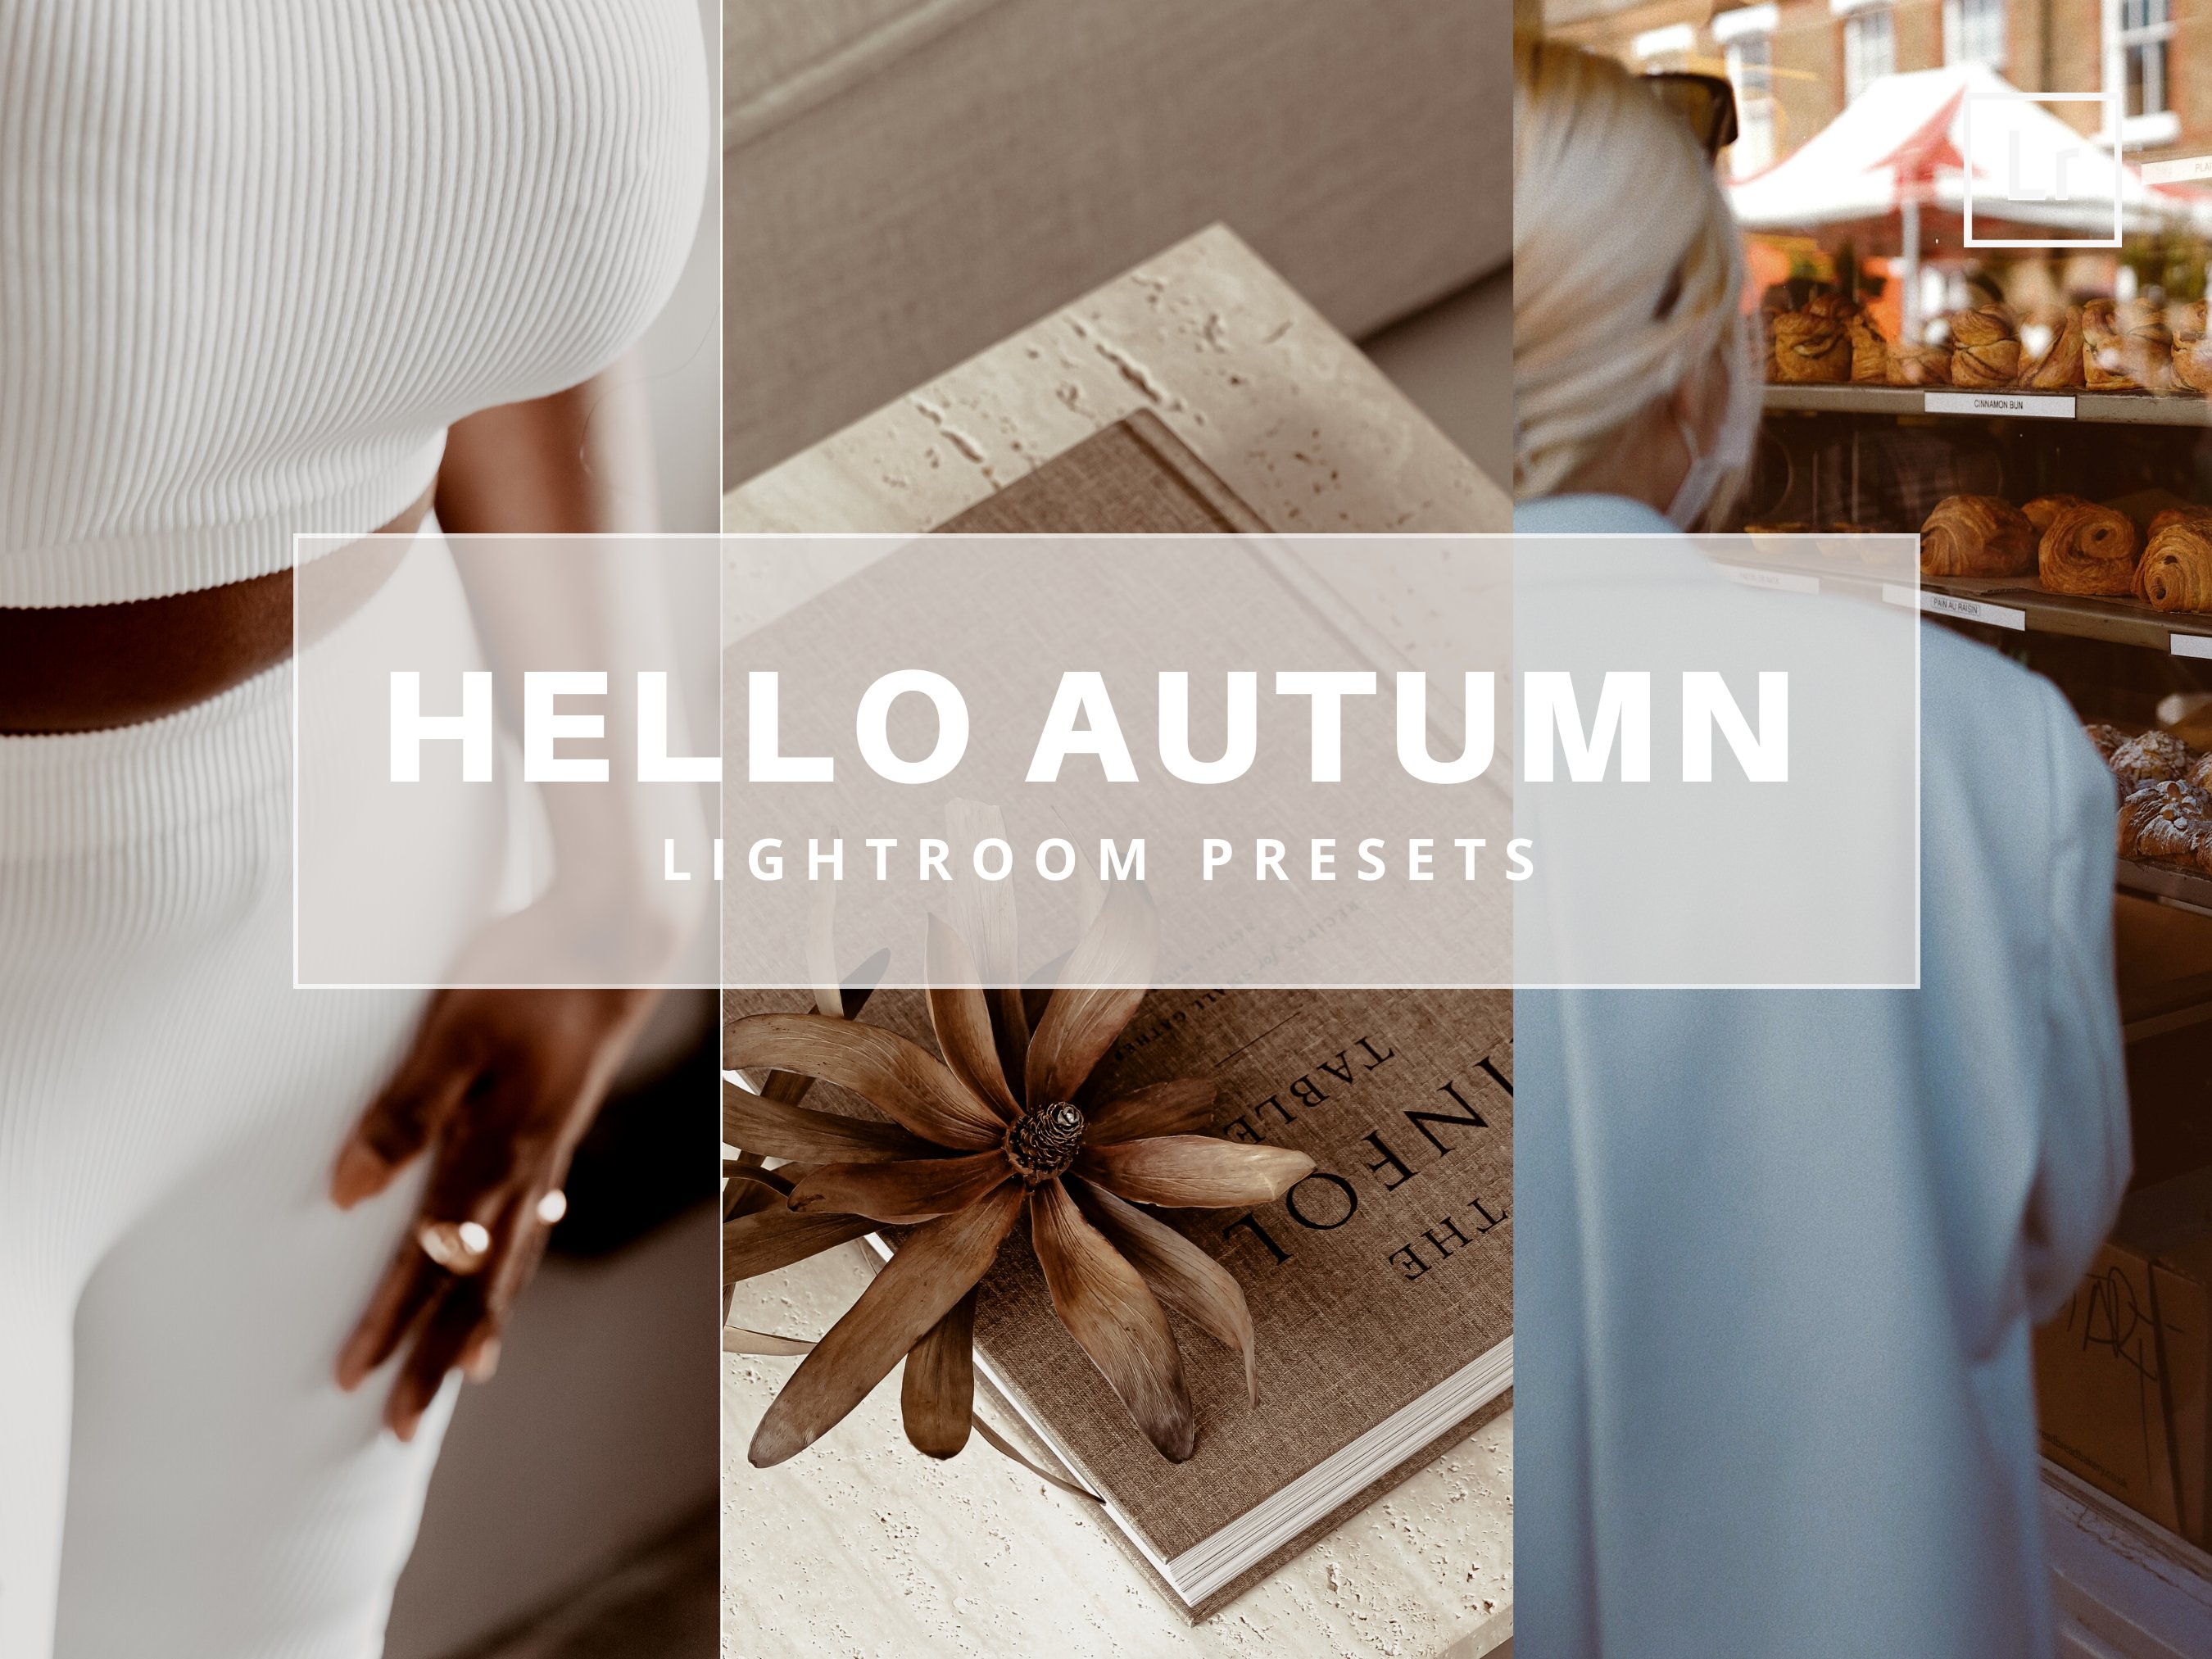 Hello Autumn Lightroom Bundlecover image.